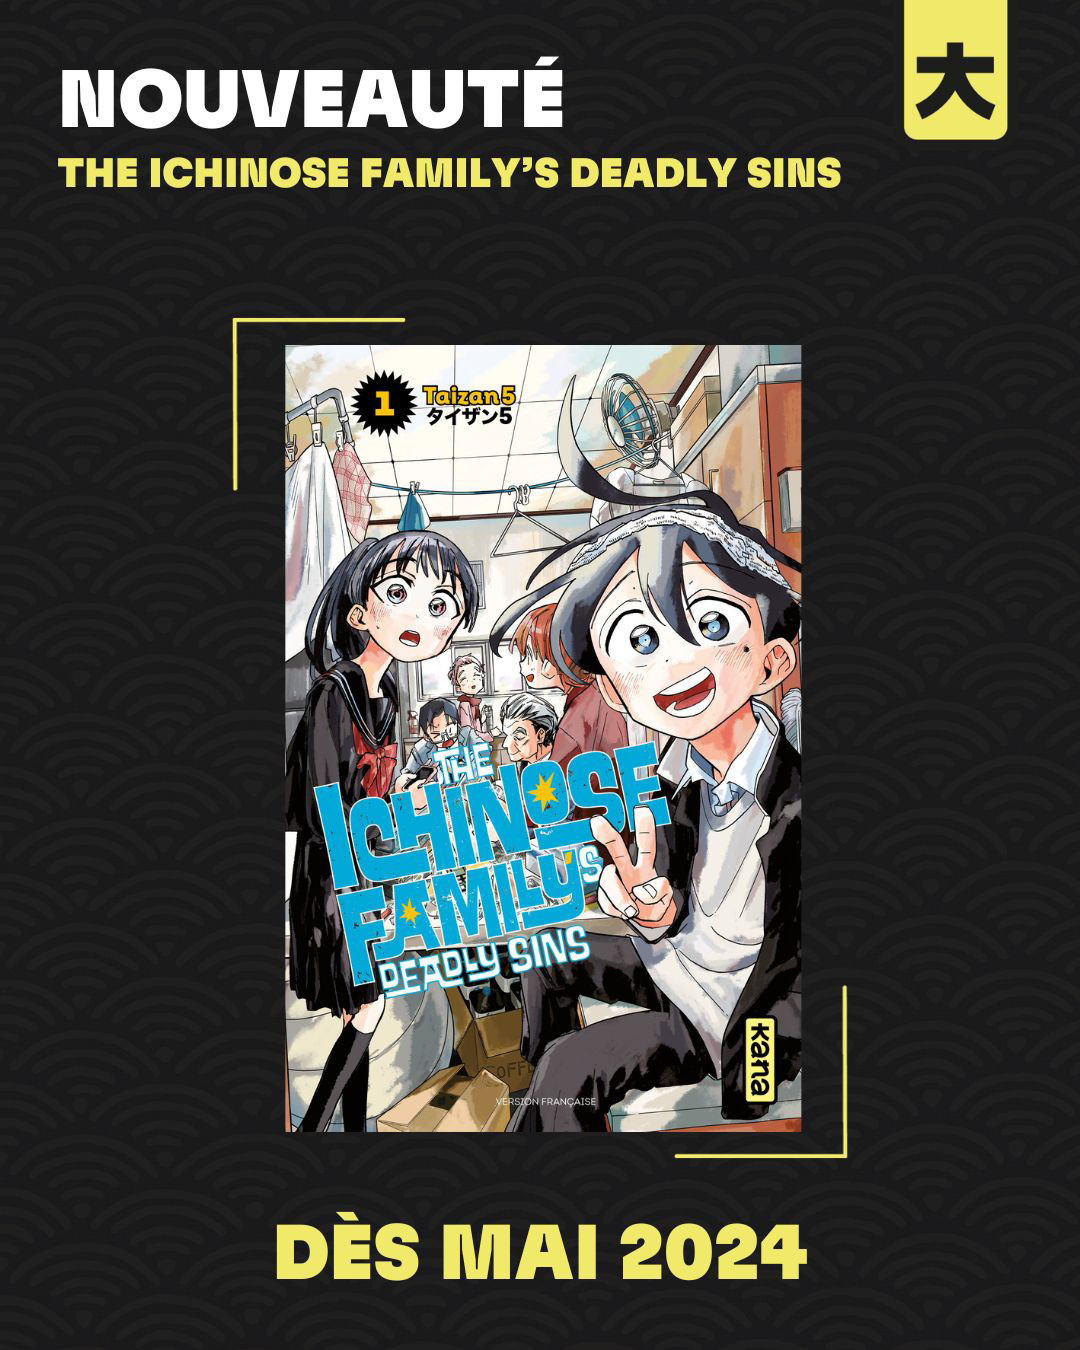 kana - The Ichinose Family's Deadly Sins